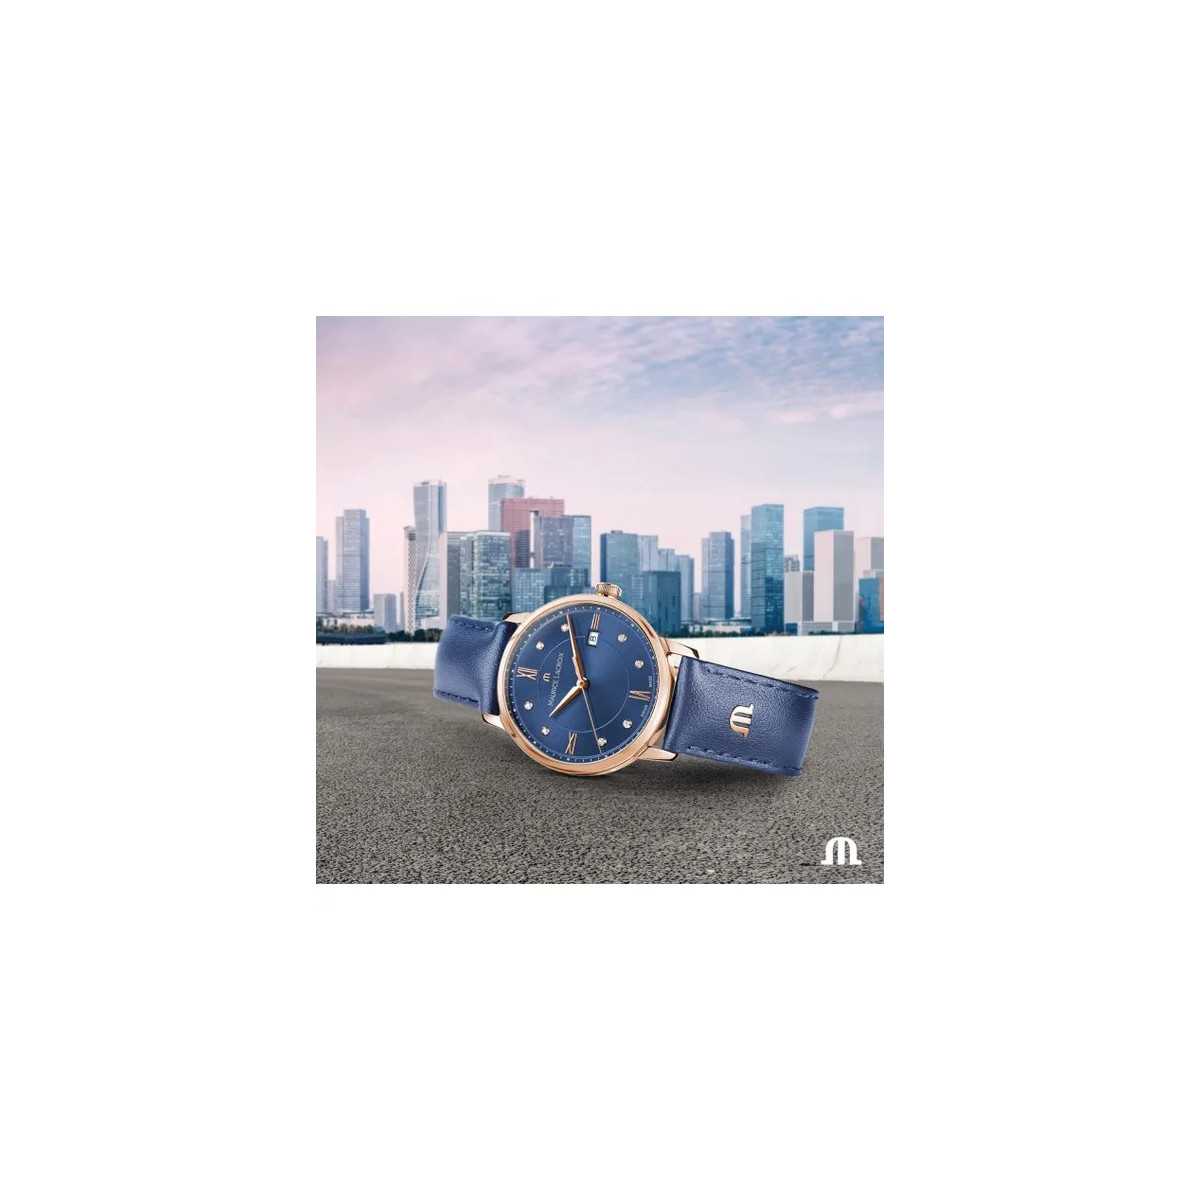 Reloj Maurice Lacroix Eliros Azul EL1094-PVP01-450-1